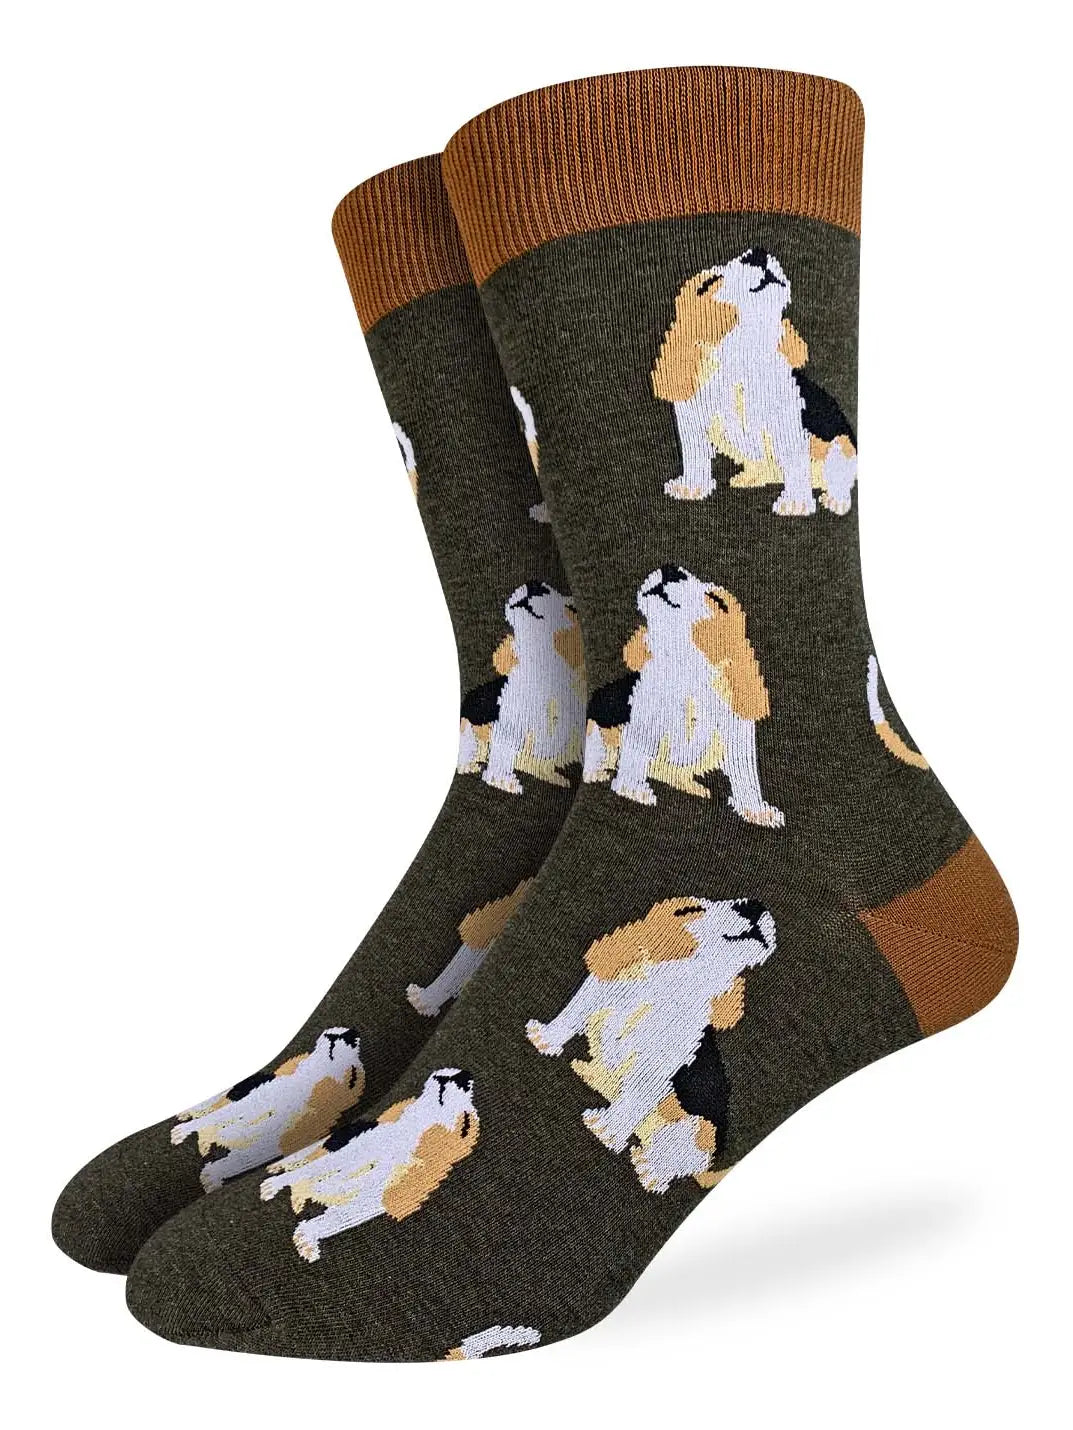 Dog-themed Socks - Beagles